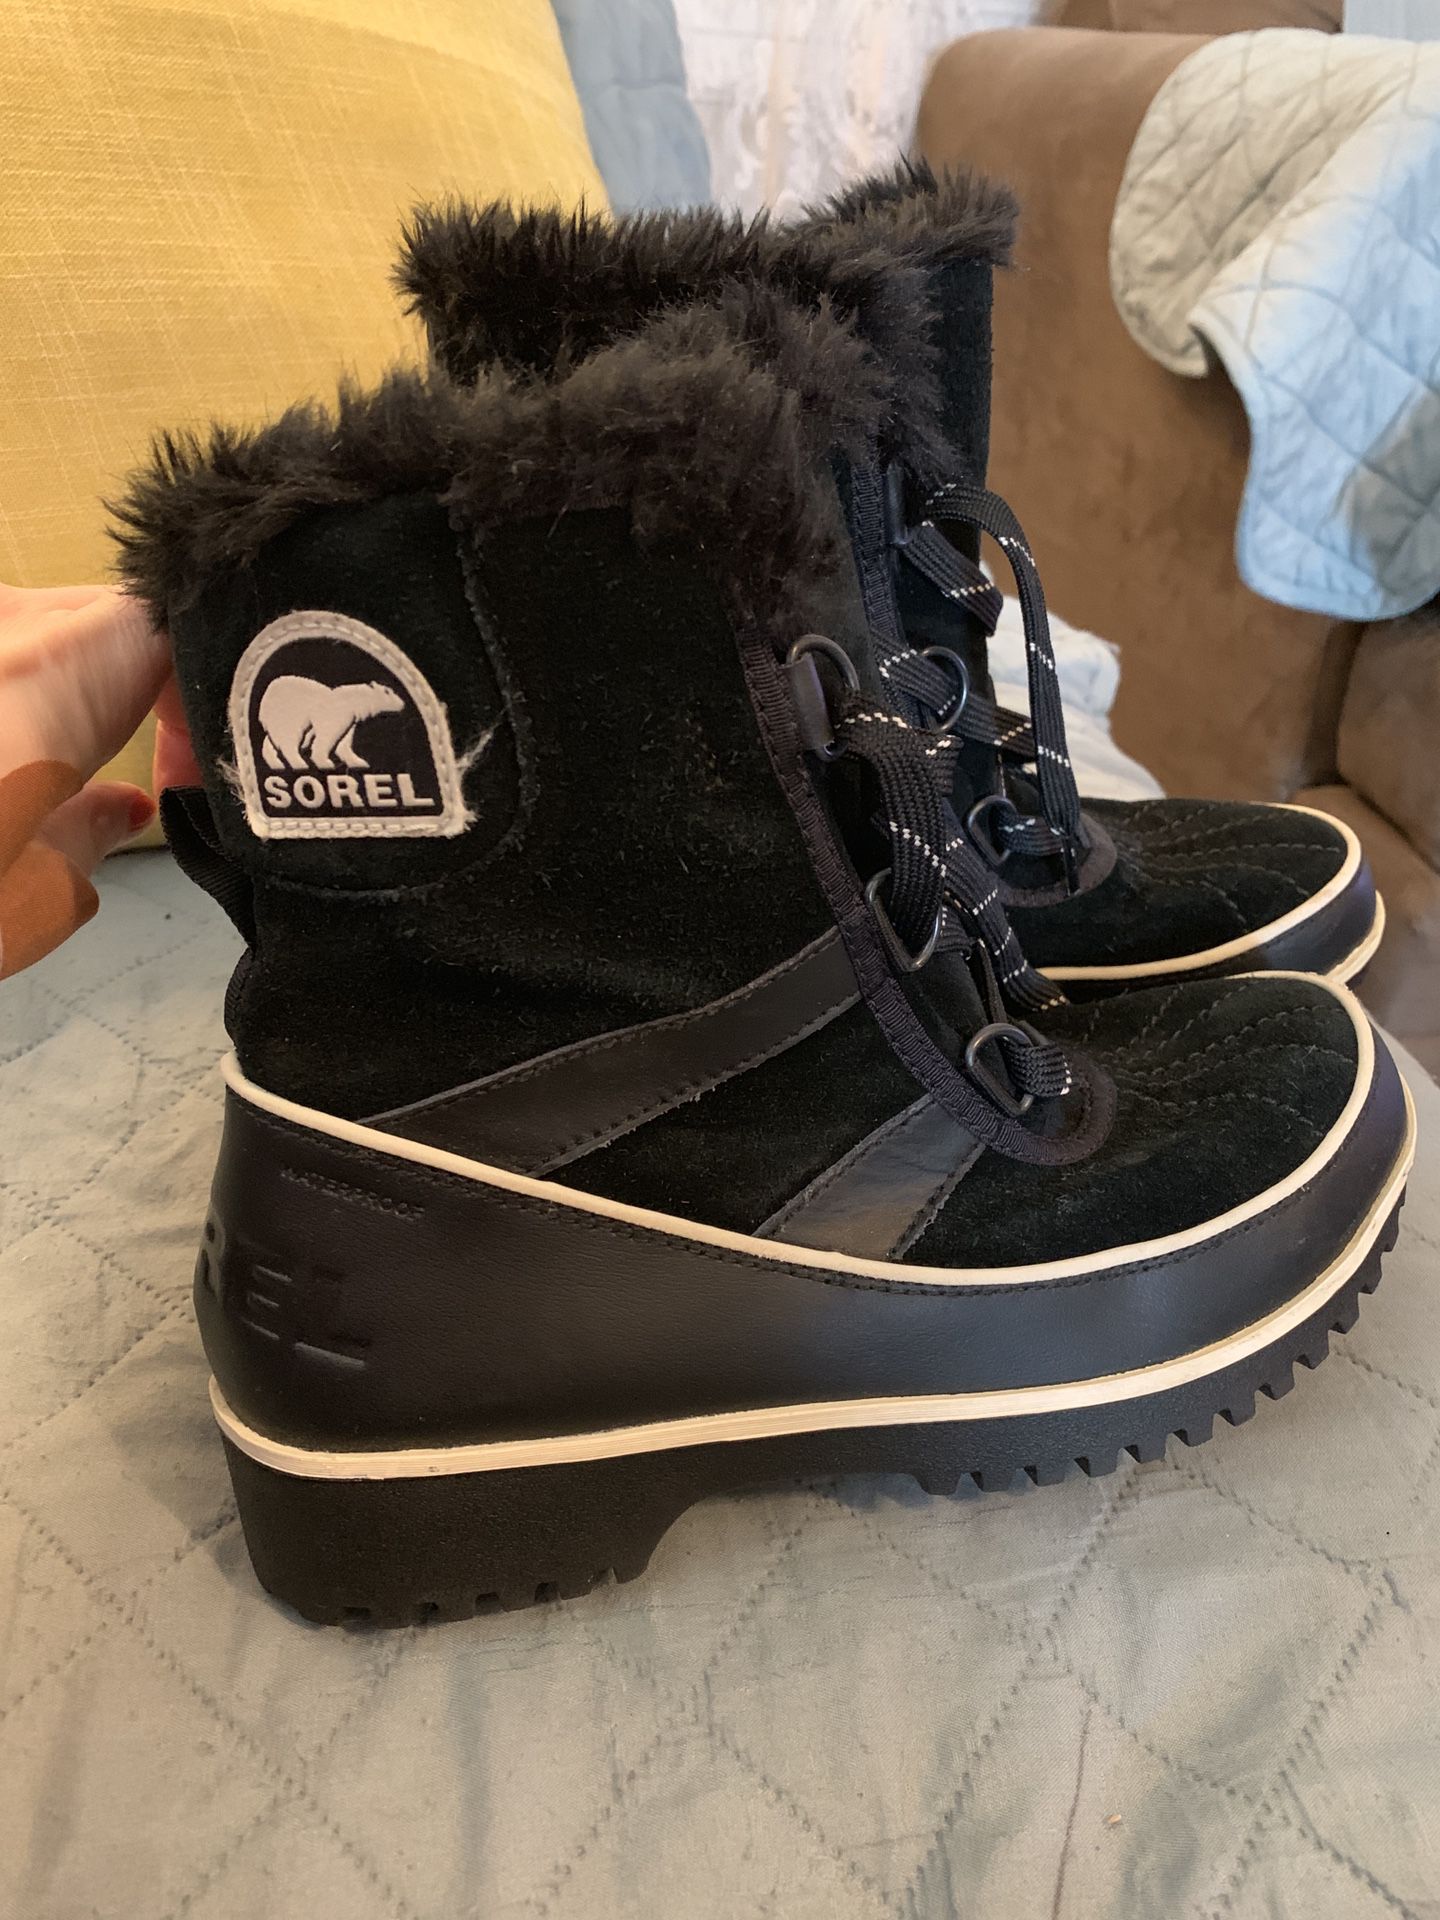 $190 Sorel black winter boots size 7